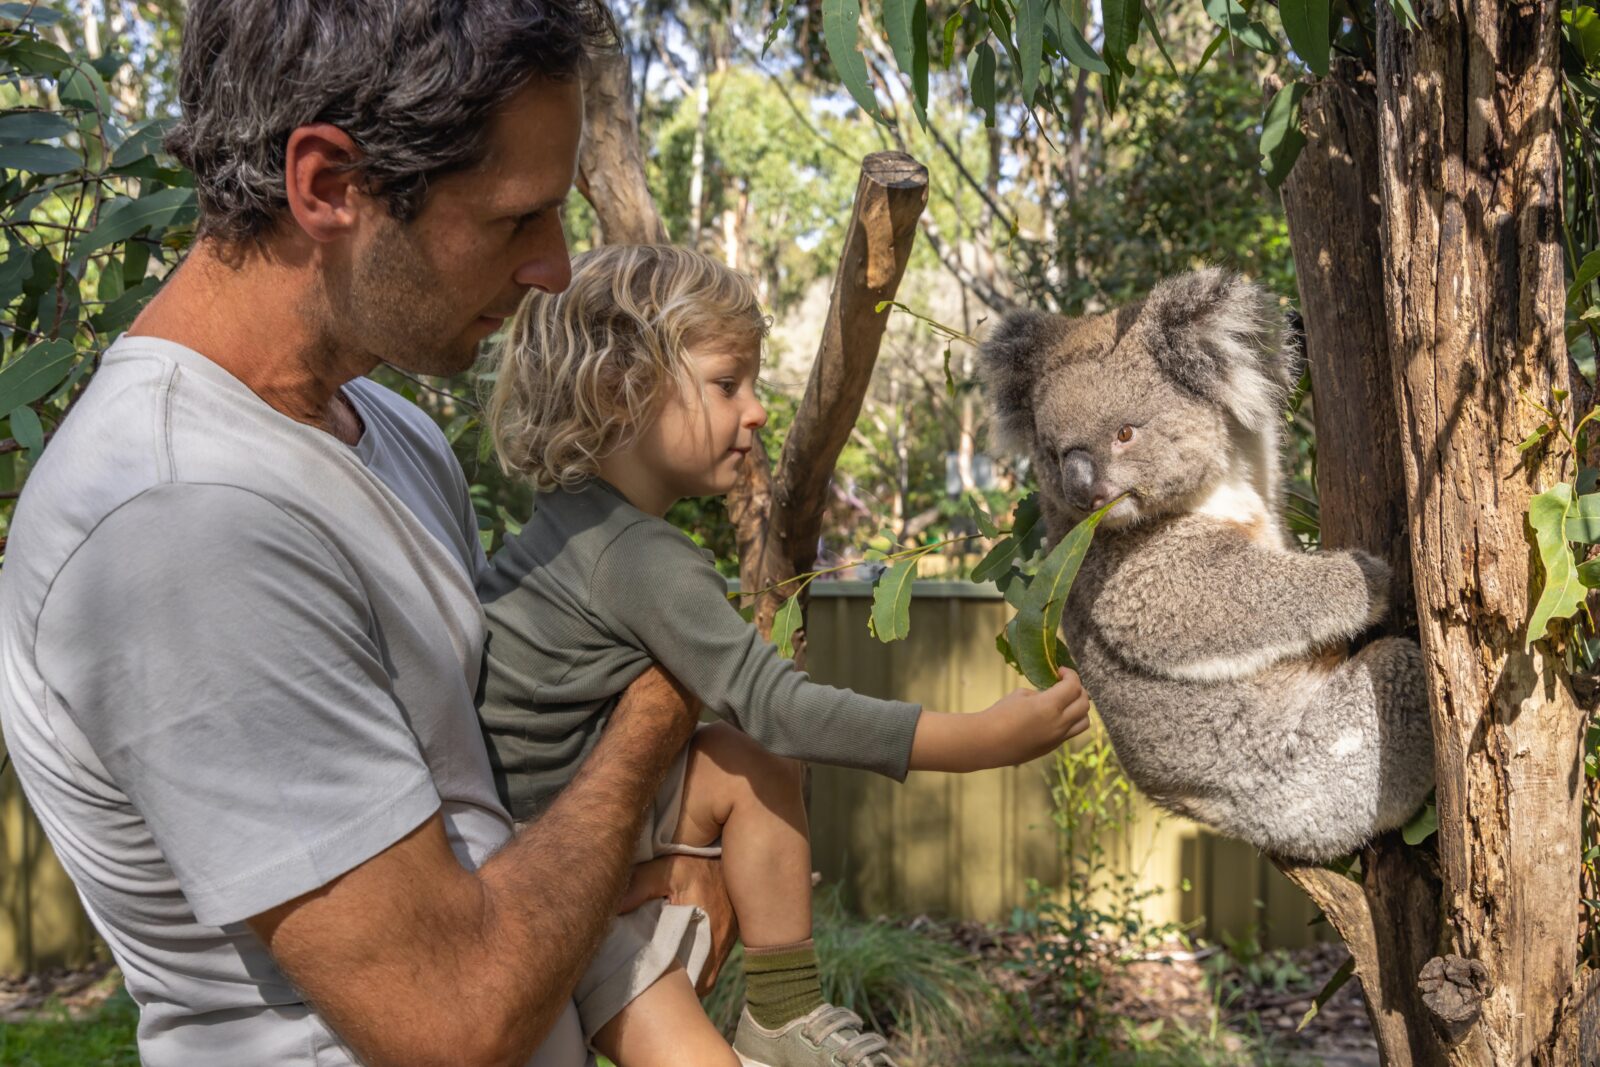 Book a koala encounter to meet and learn more about the koalas